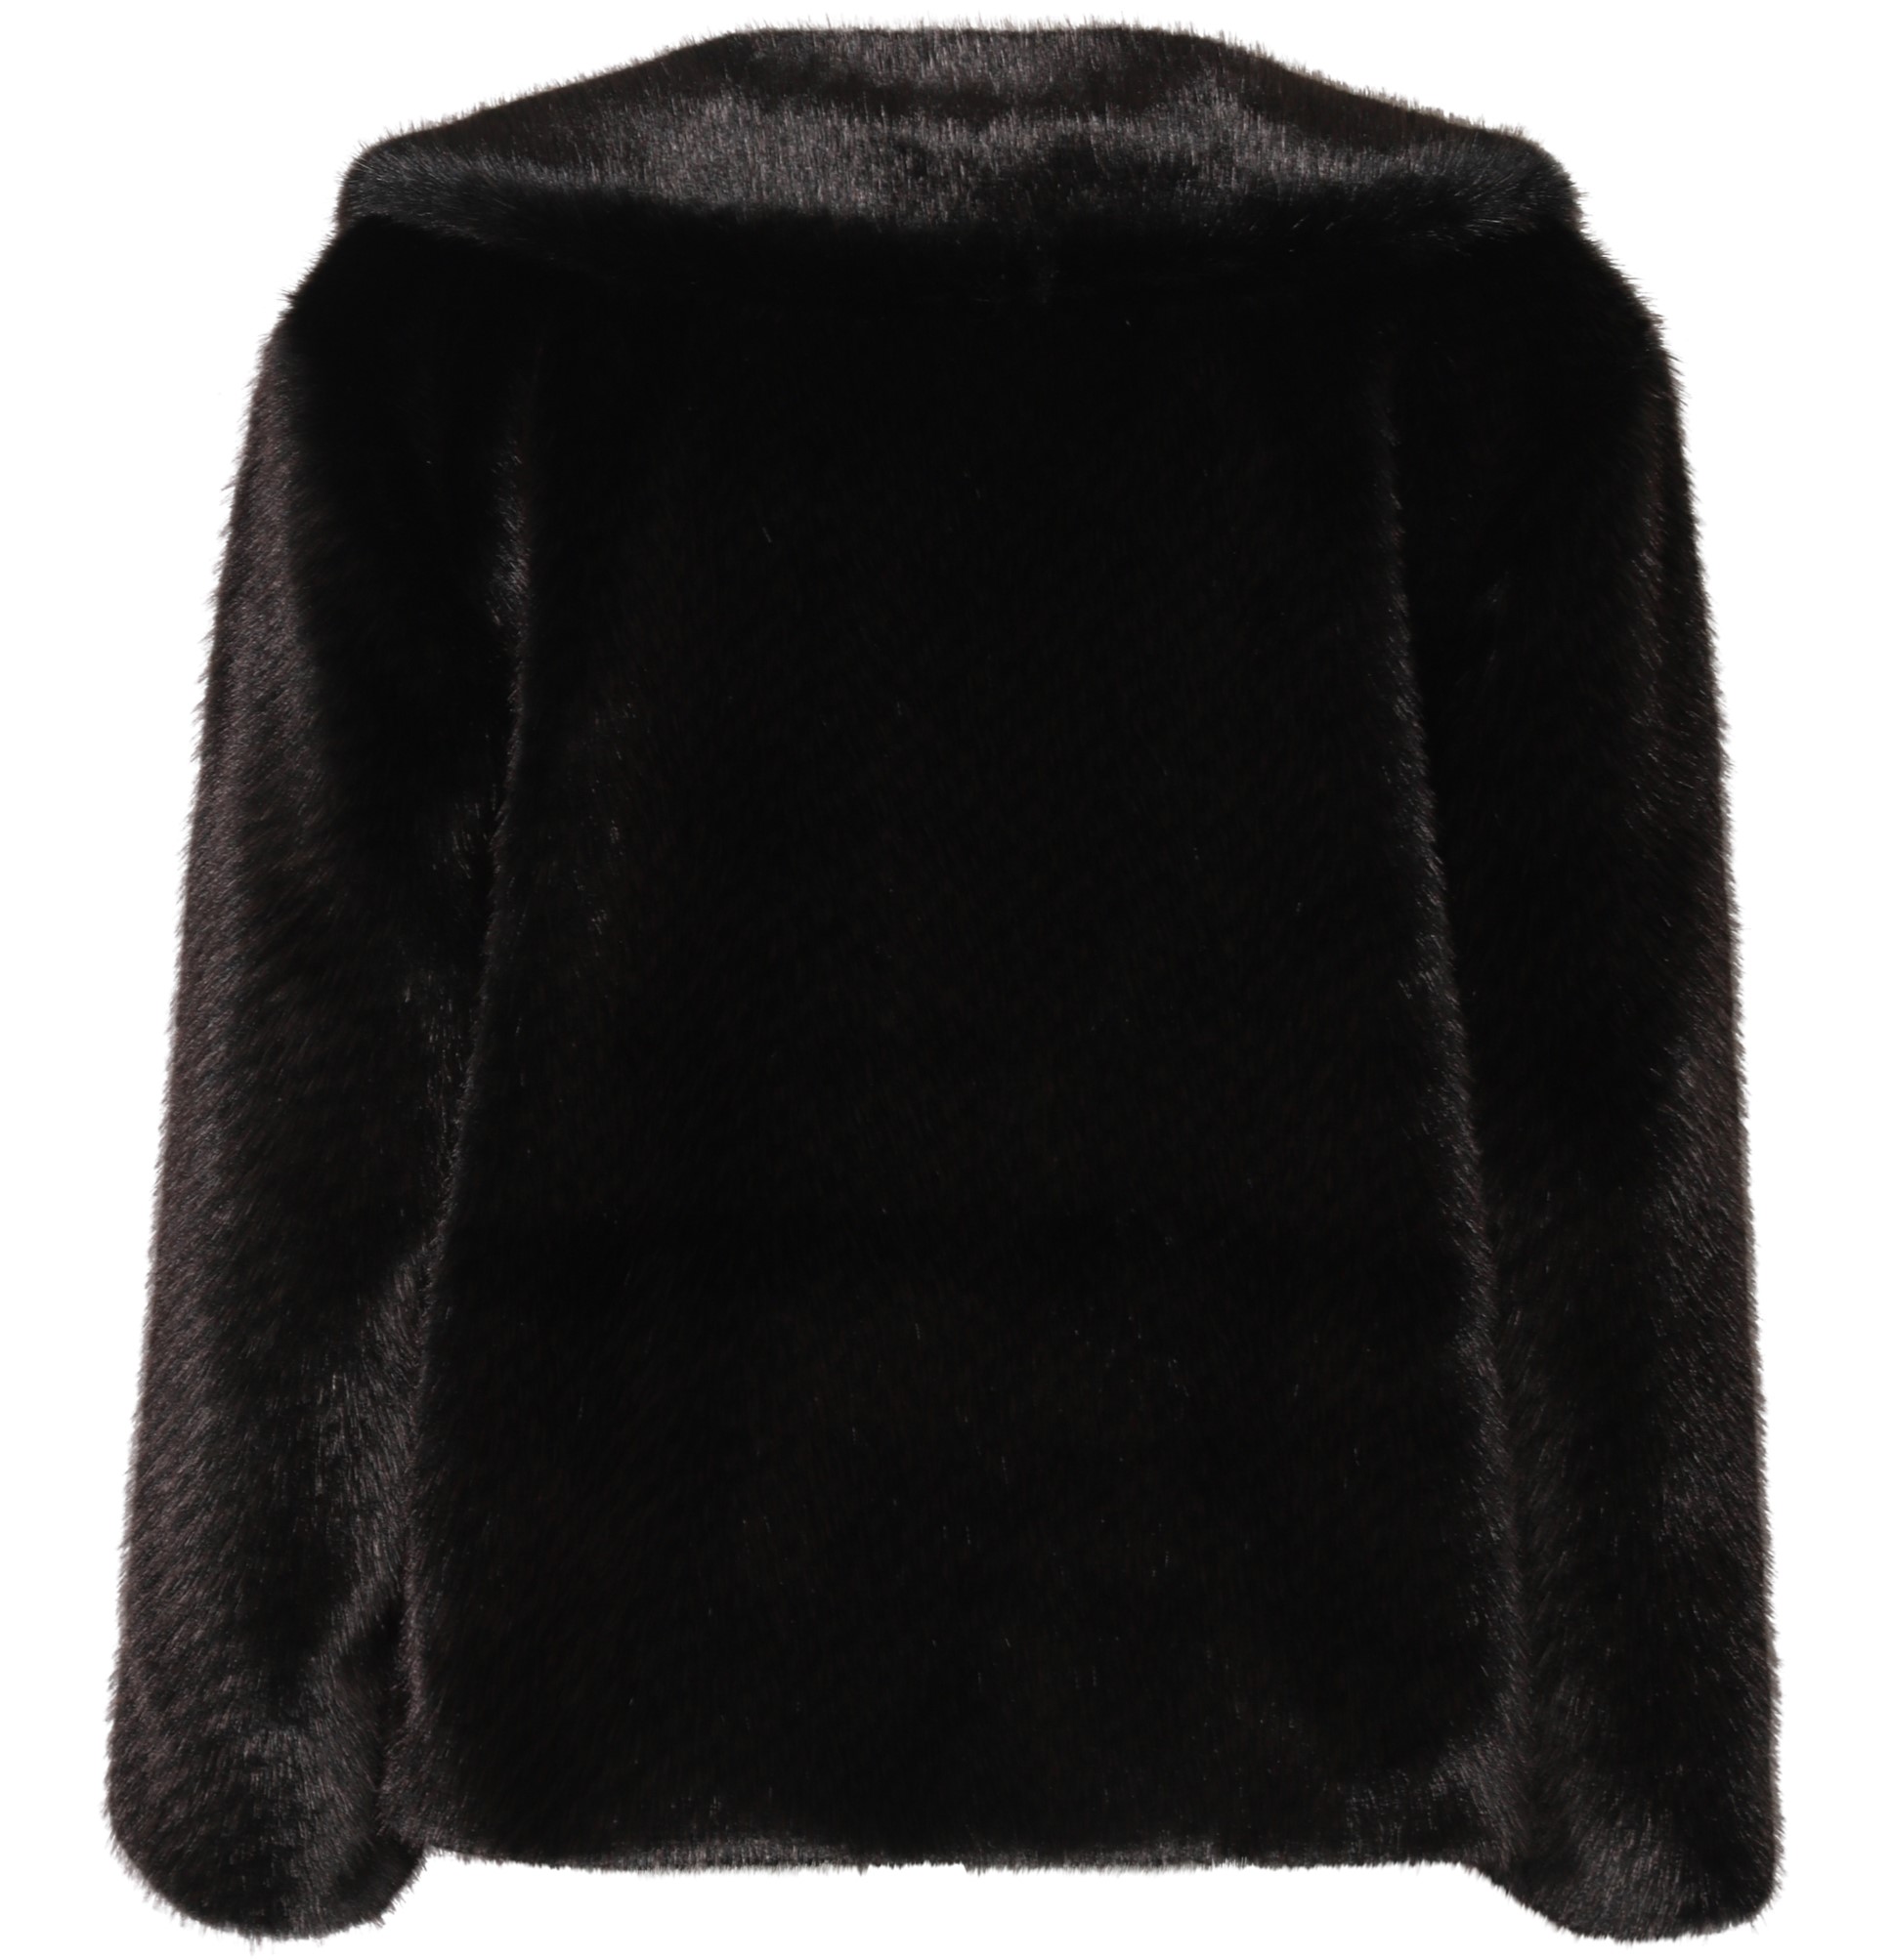 ANINE BING Hilary Faux Fur Jacket in Black/Brown XS